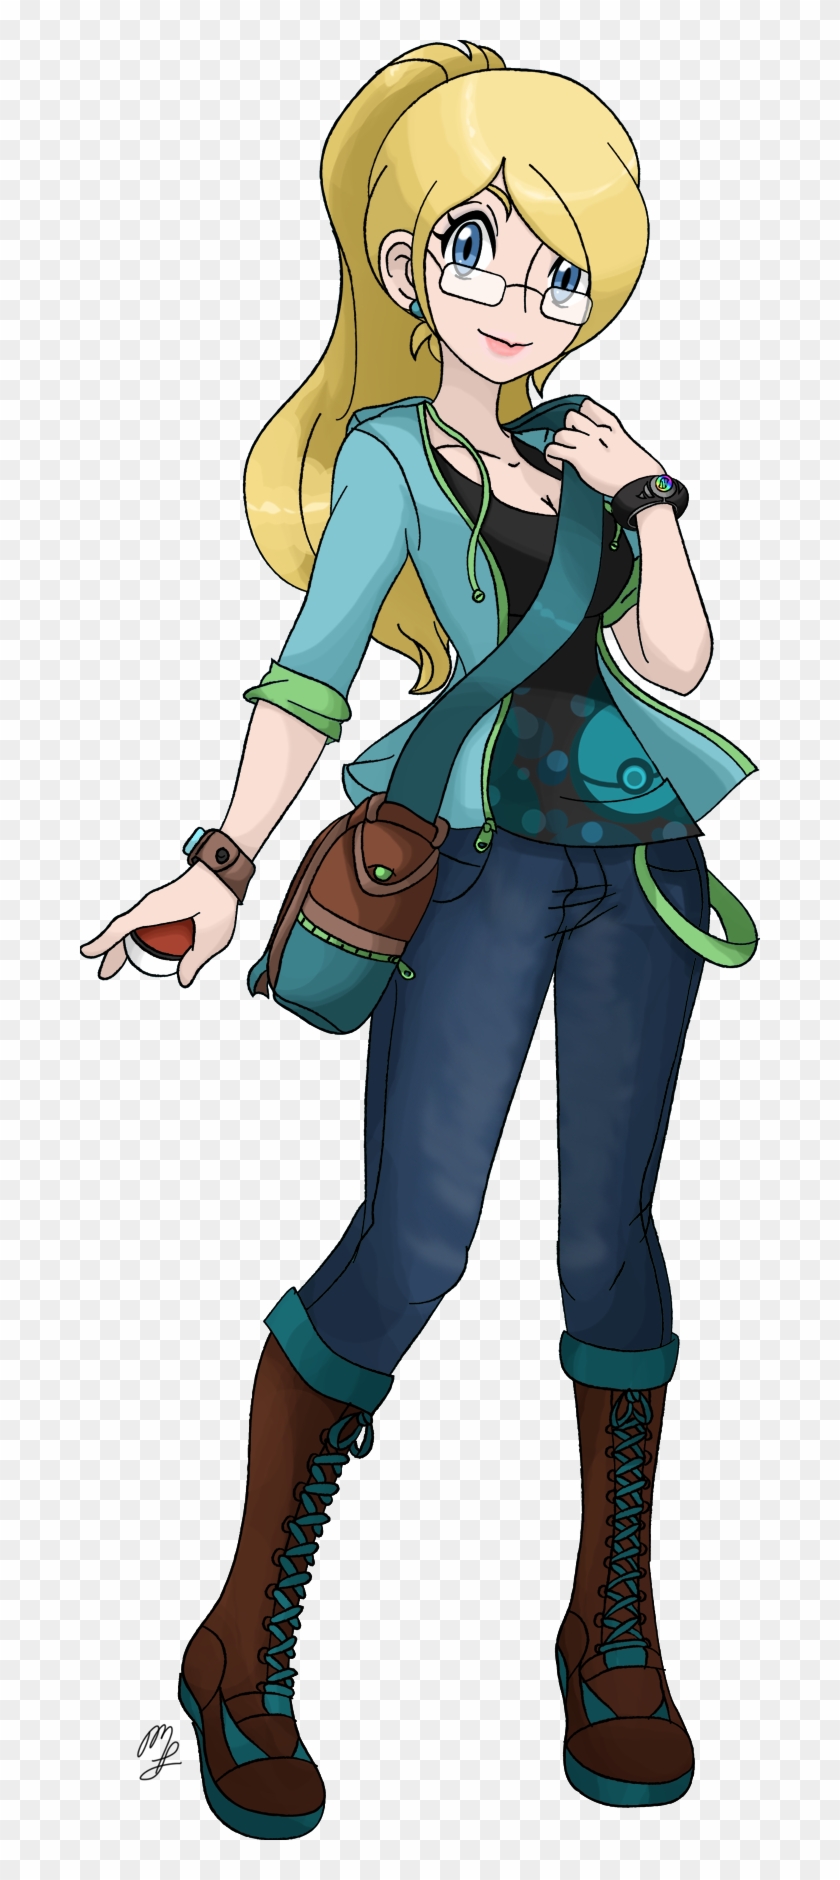 Pokemon Trainer Oc By Yukidemon - Pokemon Trainer Oc Female #825073